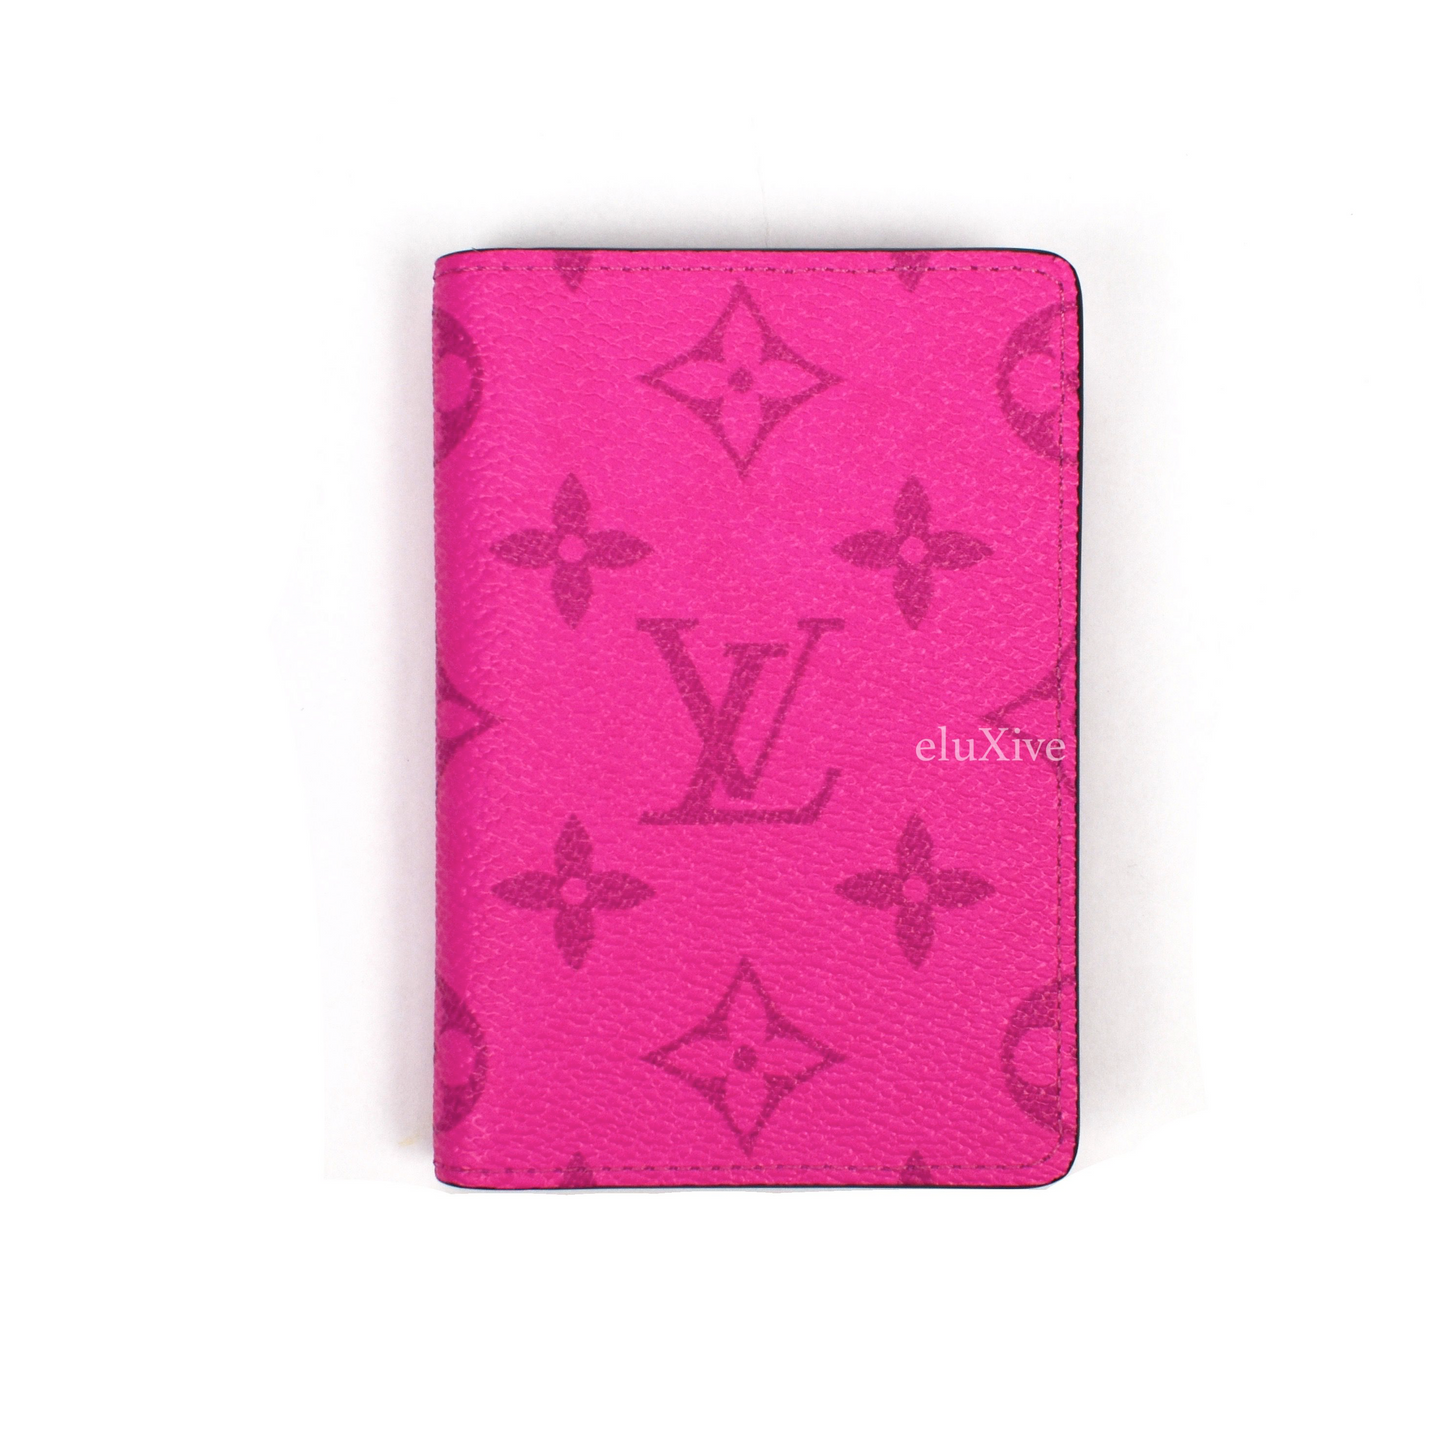 Louis Vuitton Pocket Organizer - Blue/Pink – LIMITED